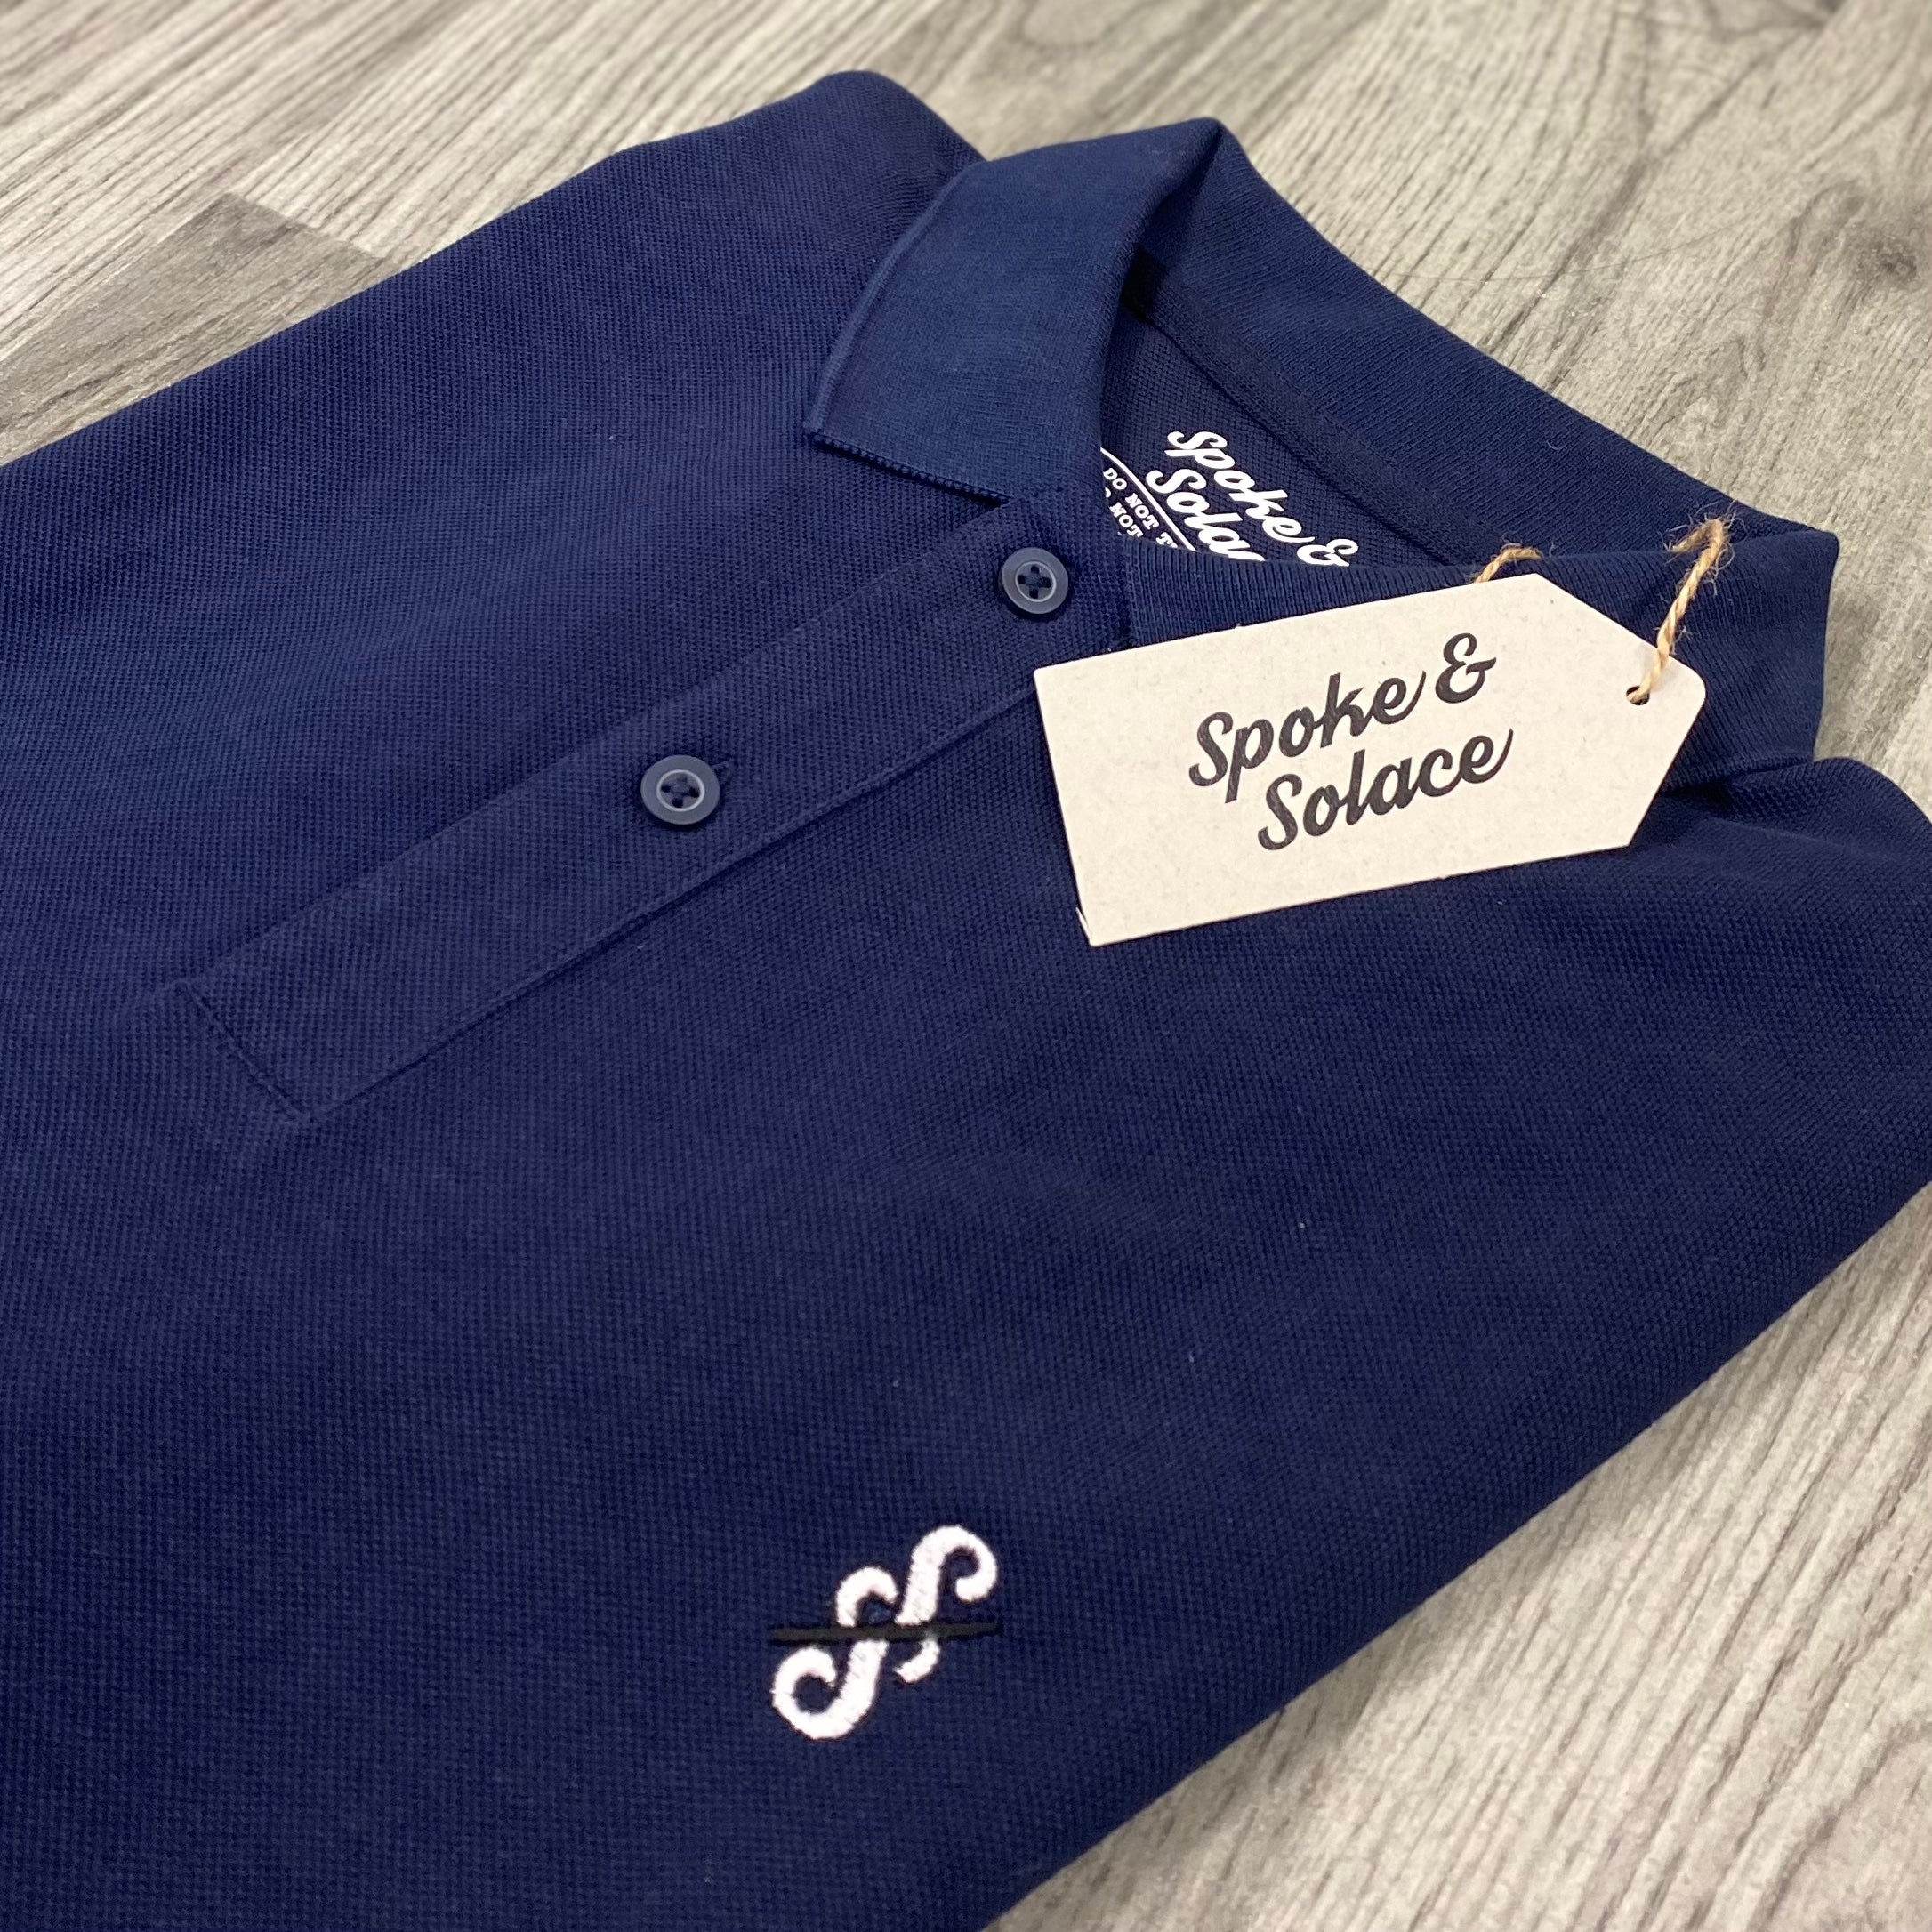 Spoke & Solace SS Embroidered Monochrome Polo Shirt - Spoke & Solace